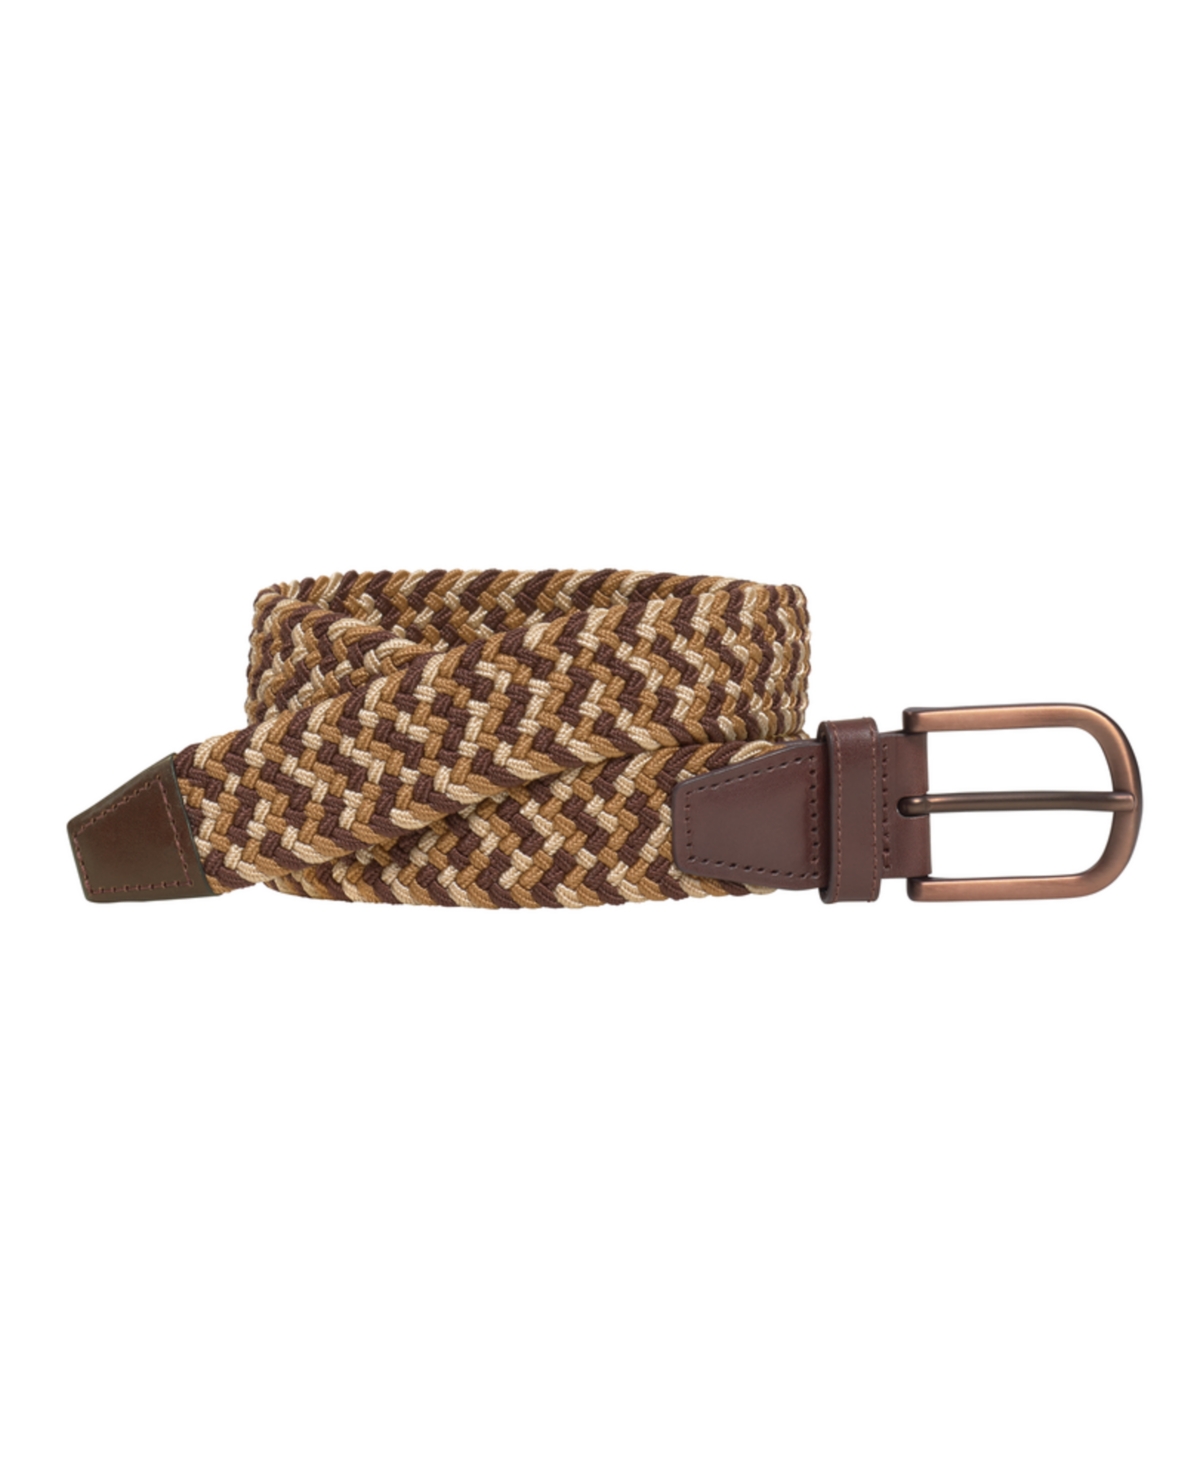 Men's Woven Stretch-Knit Belt - Brown Multi